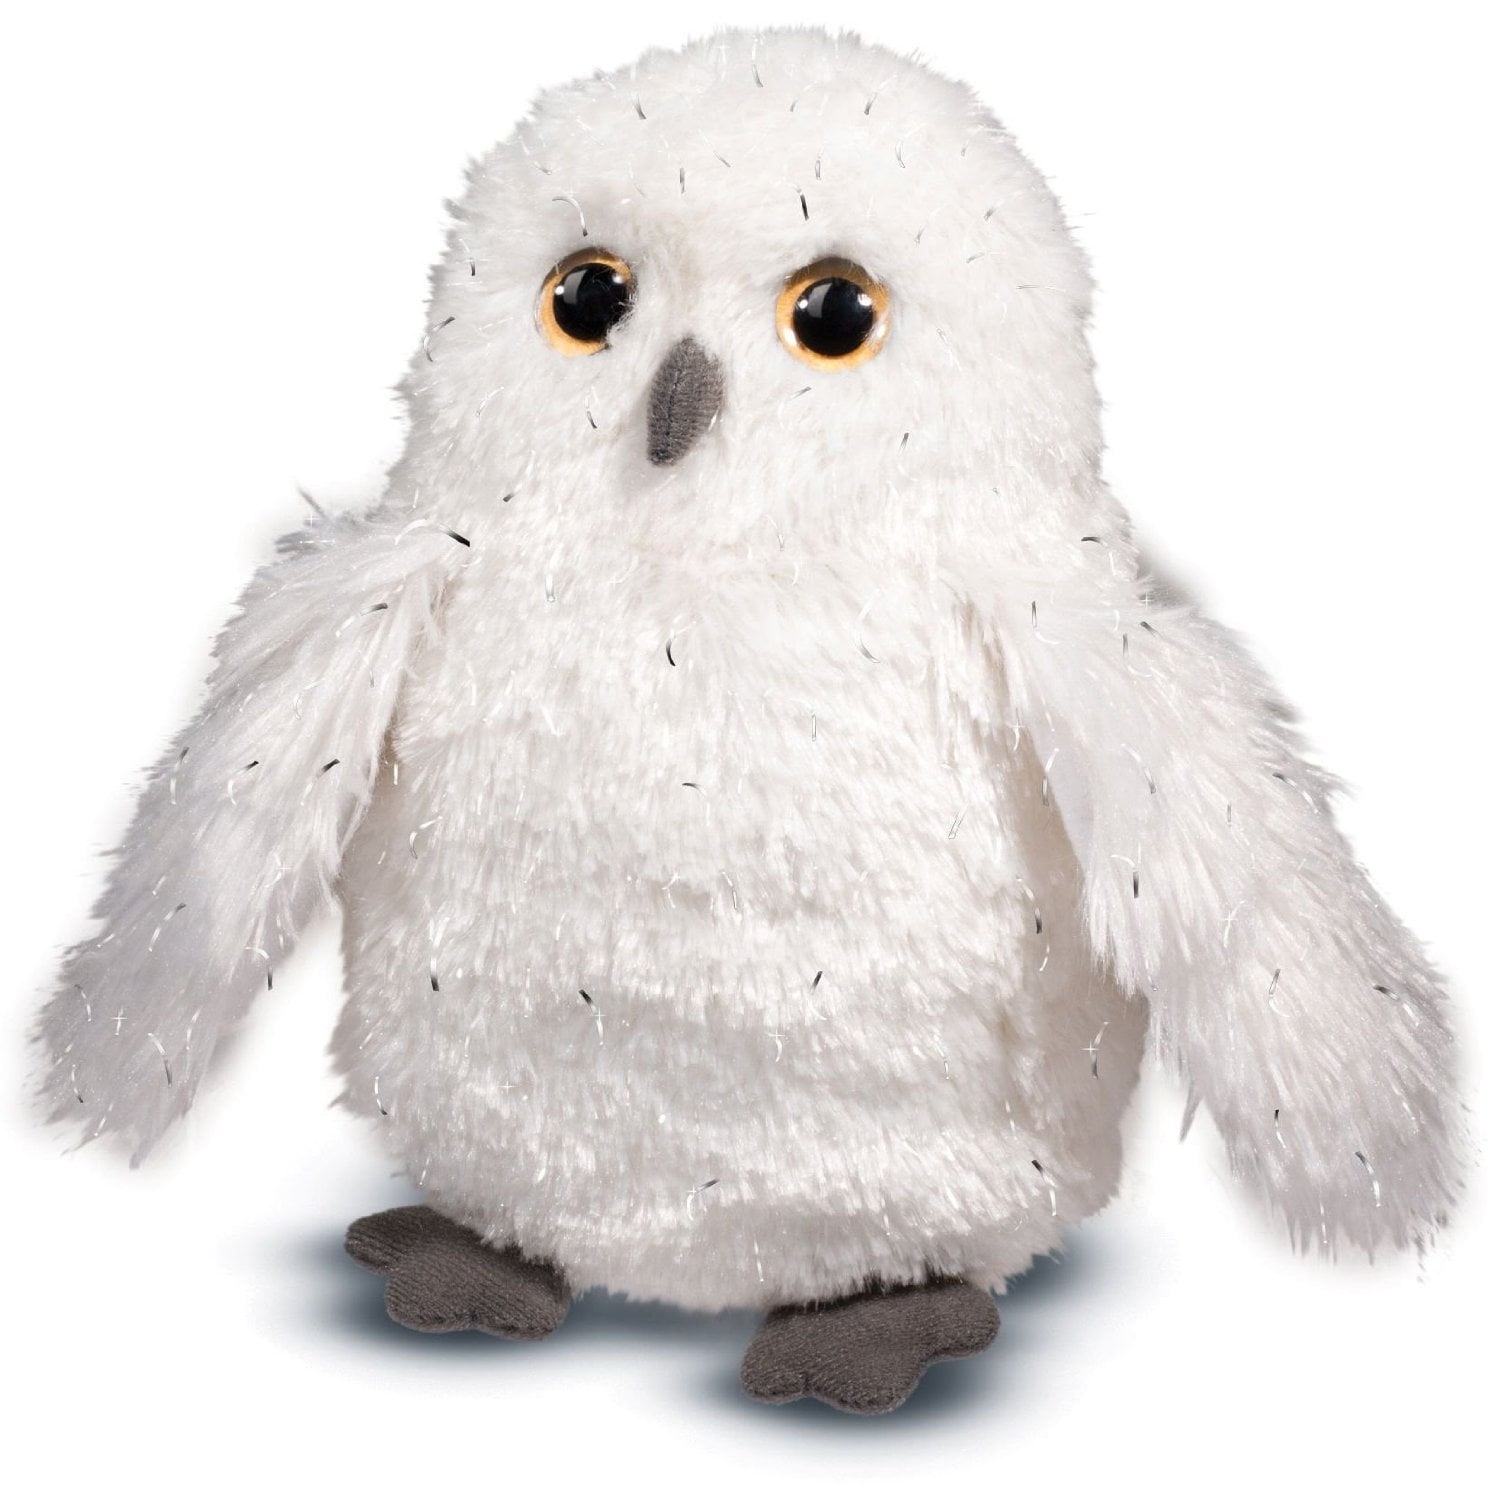 Douglas Cuddle Toys Wizard The Snowy Owl # 3841 Stuffed Animal Toy 